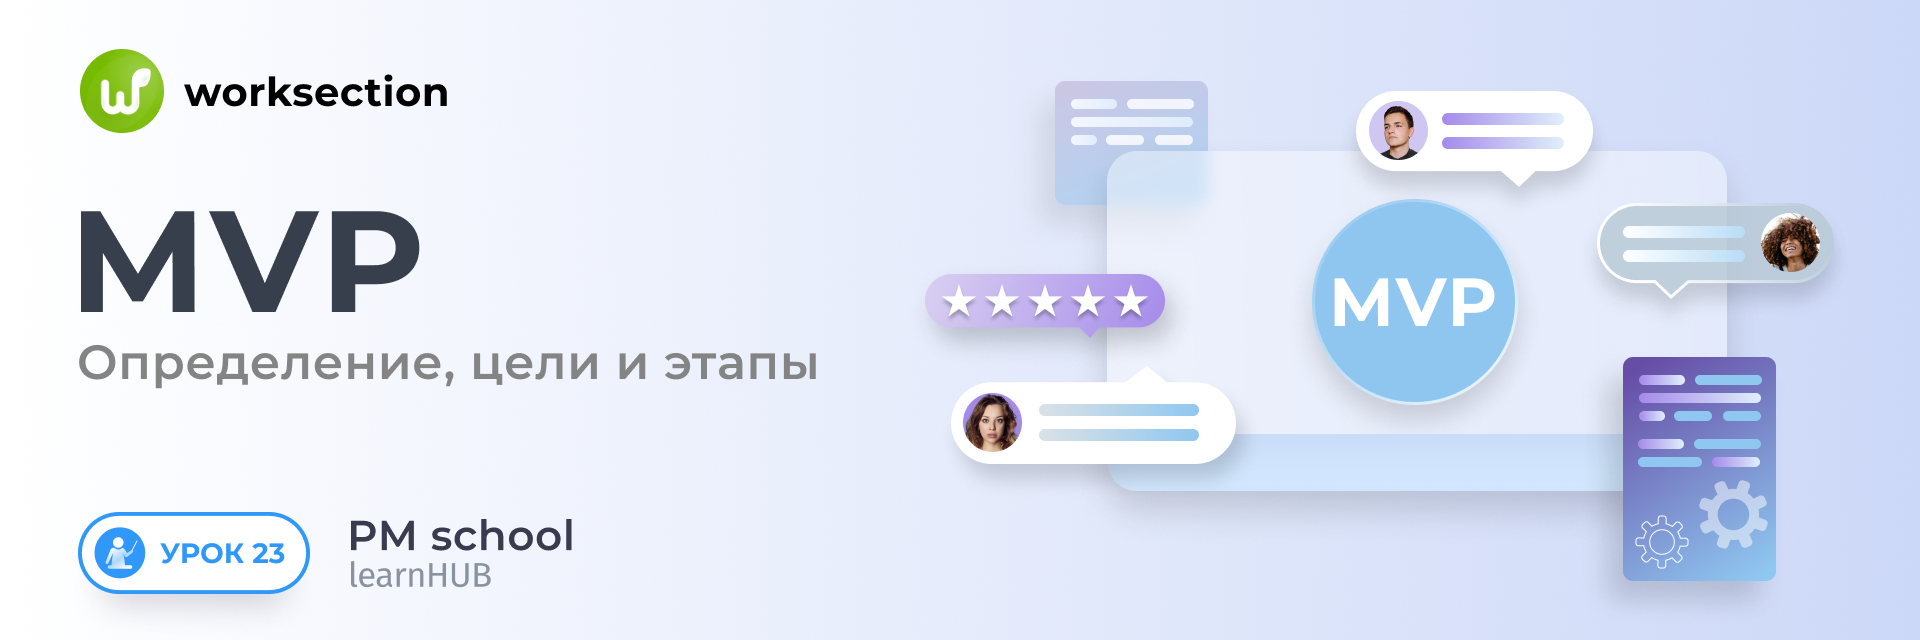 Телеграмм на русском вэбверсия. Worksection logo. Рт телеграмм русском